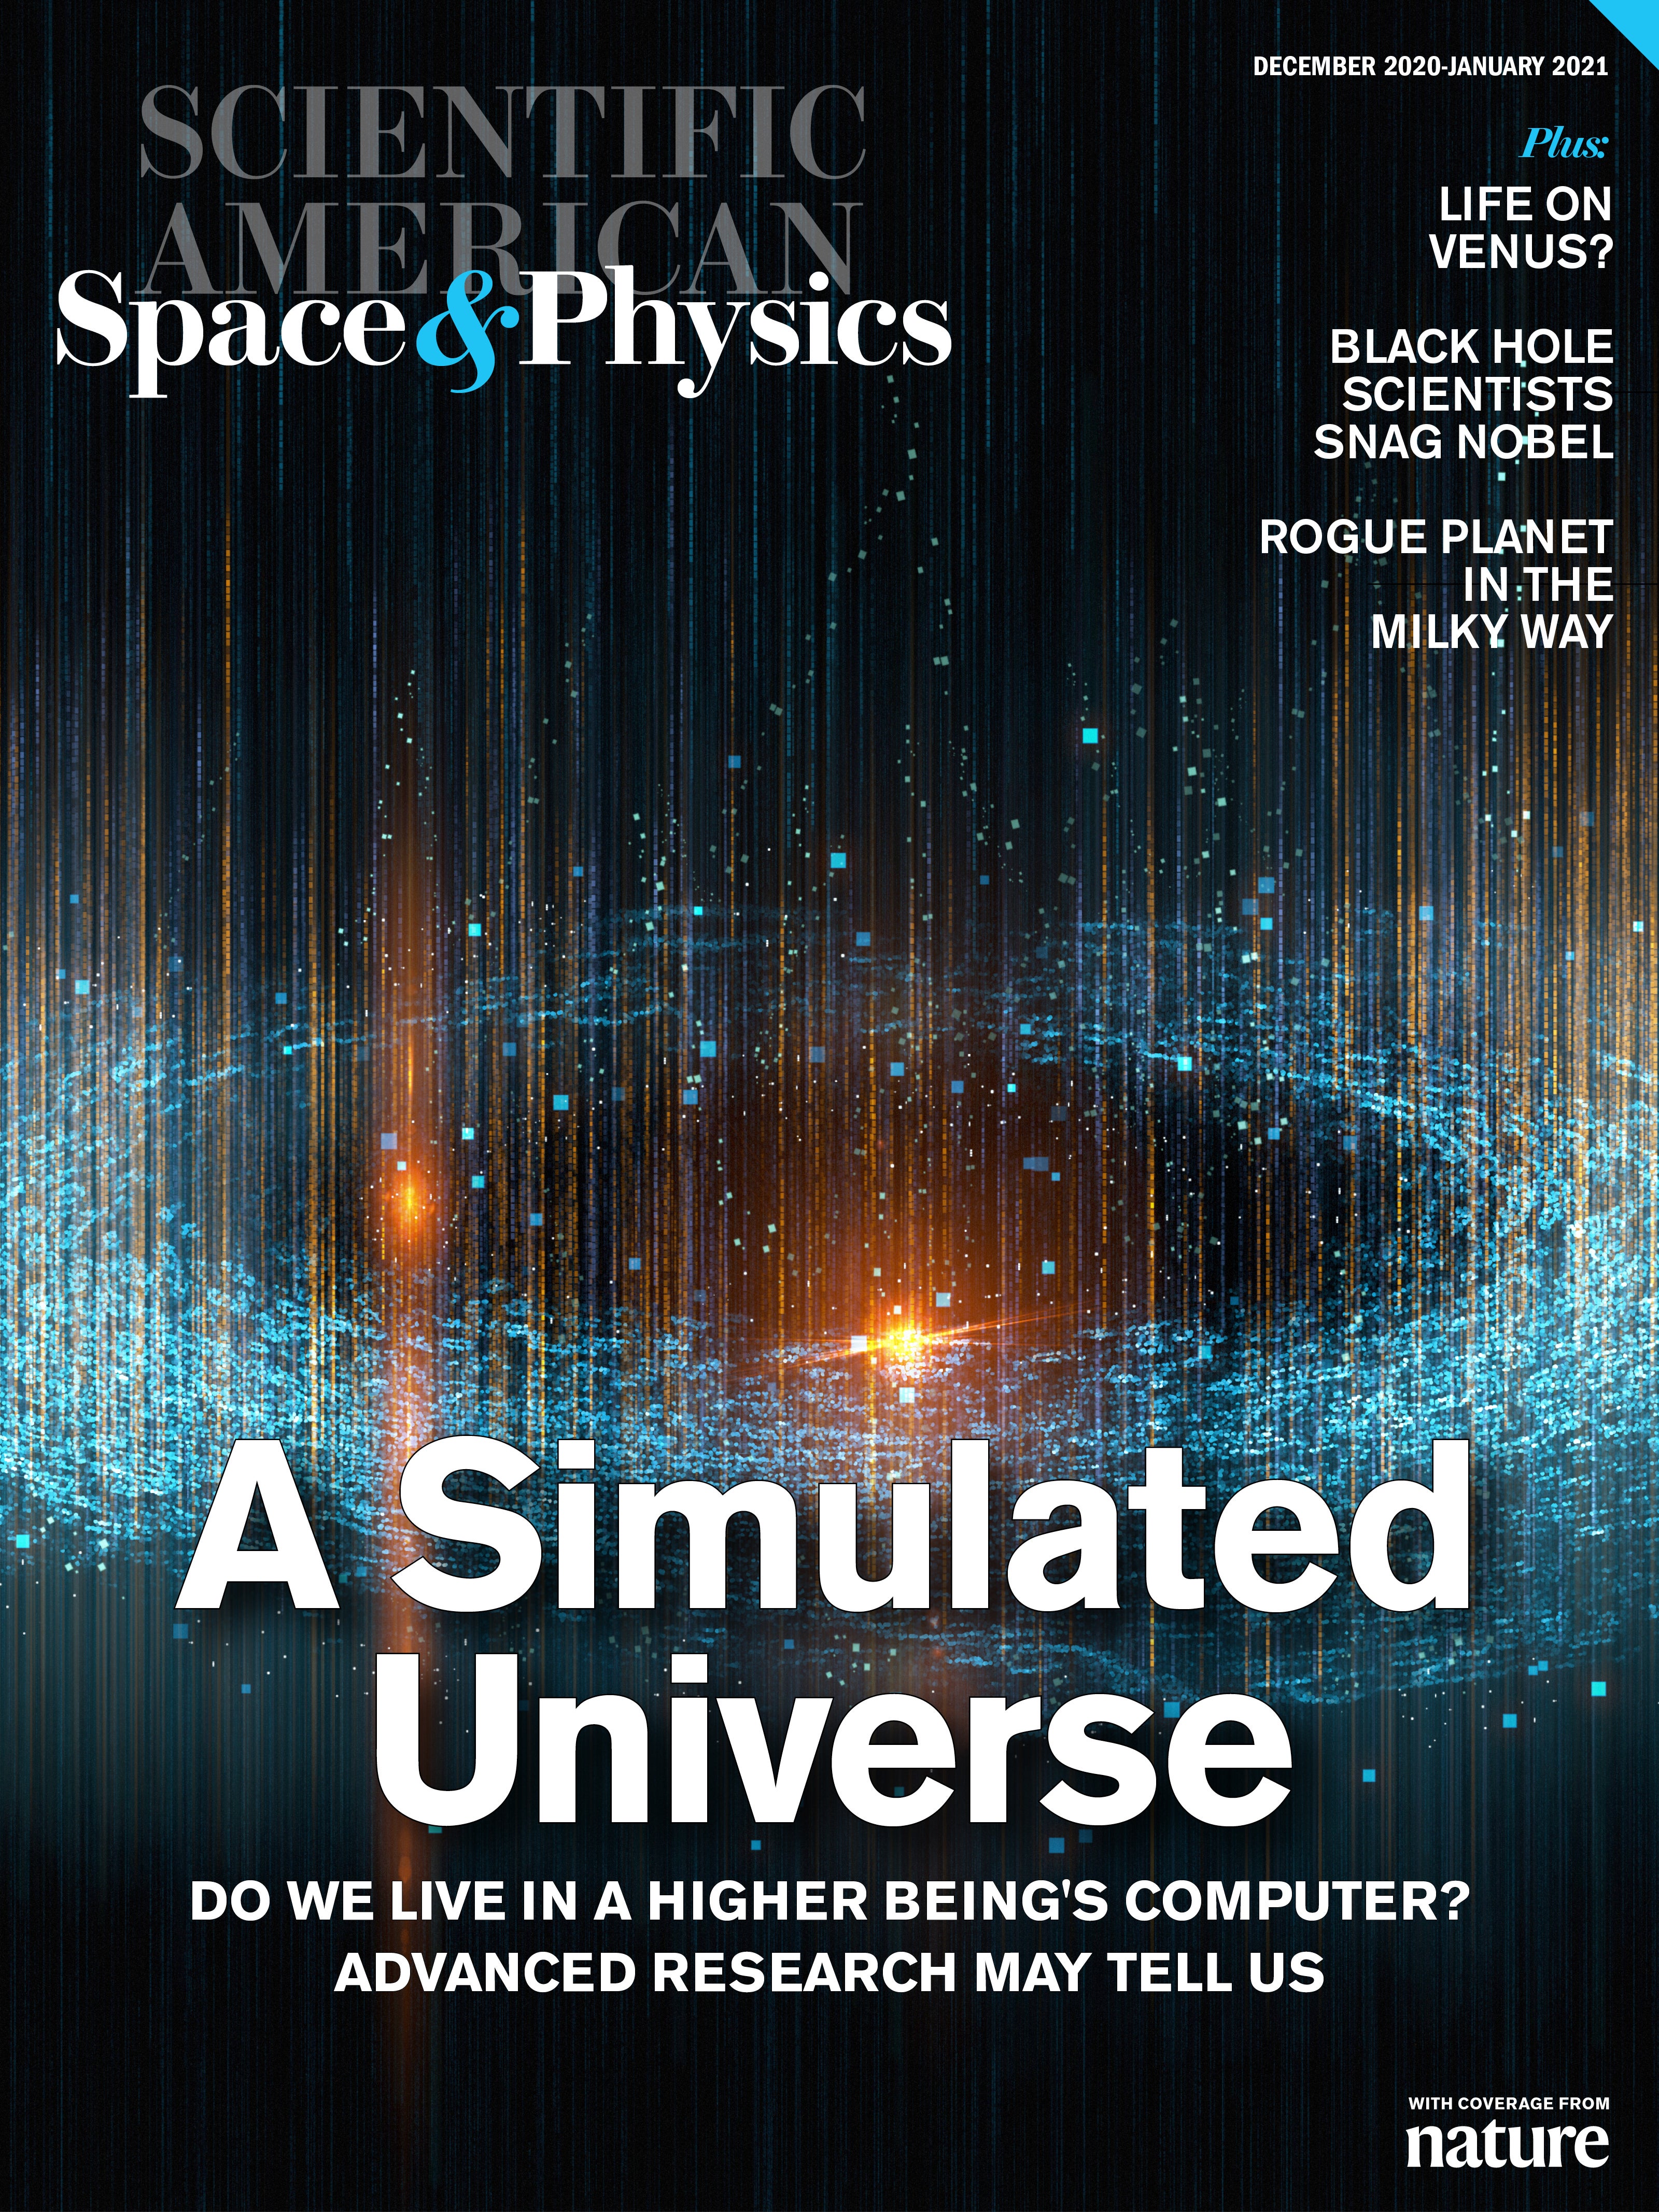 Scientific American Space & Physics, Volume 3, Issue 6